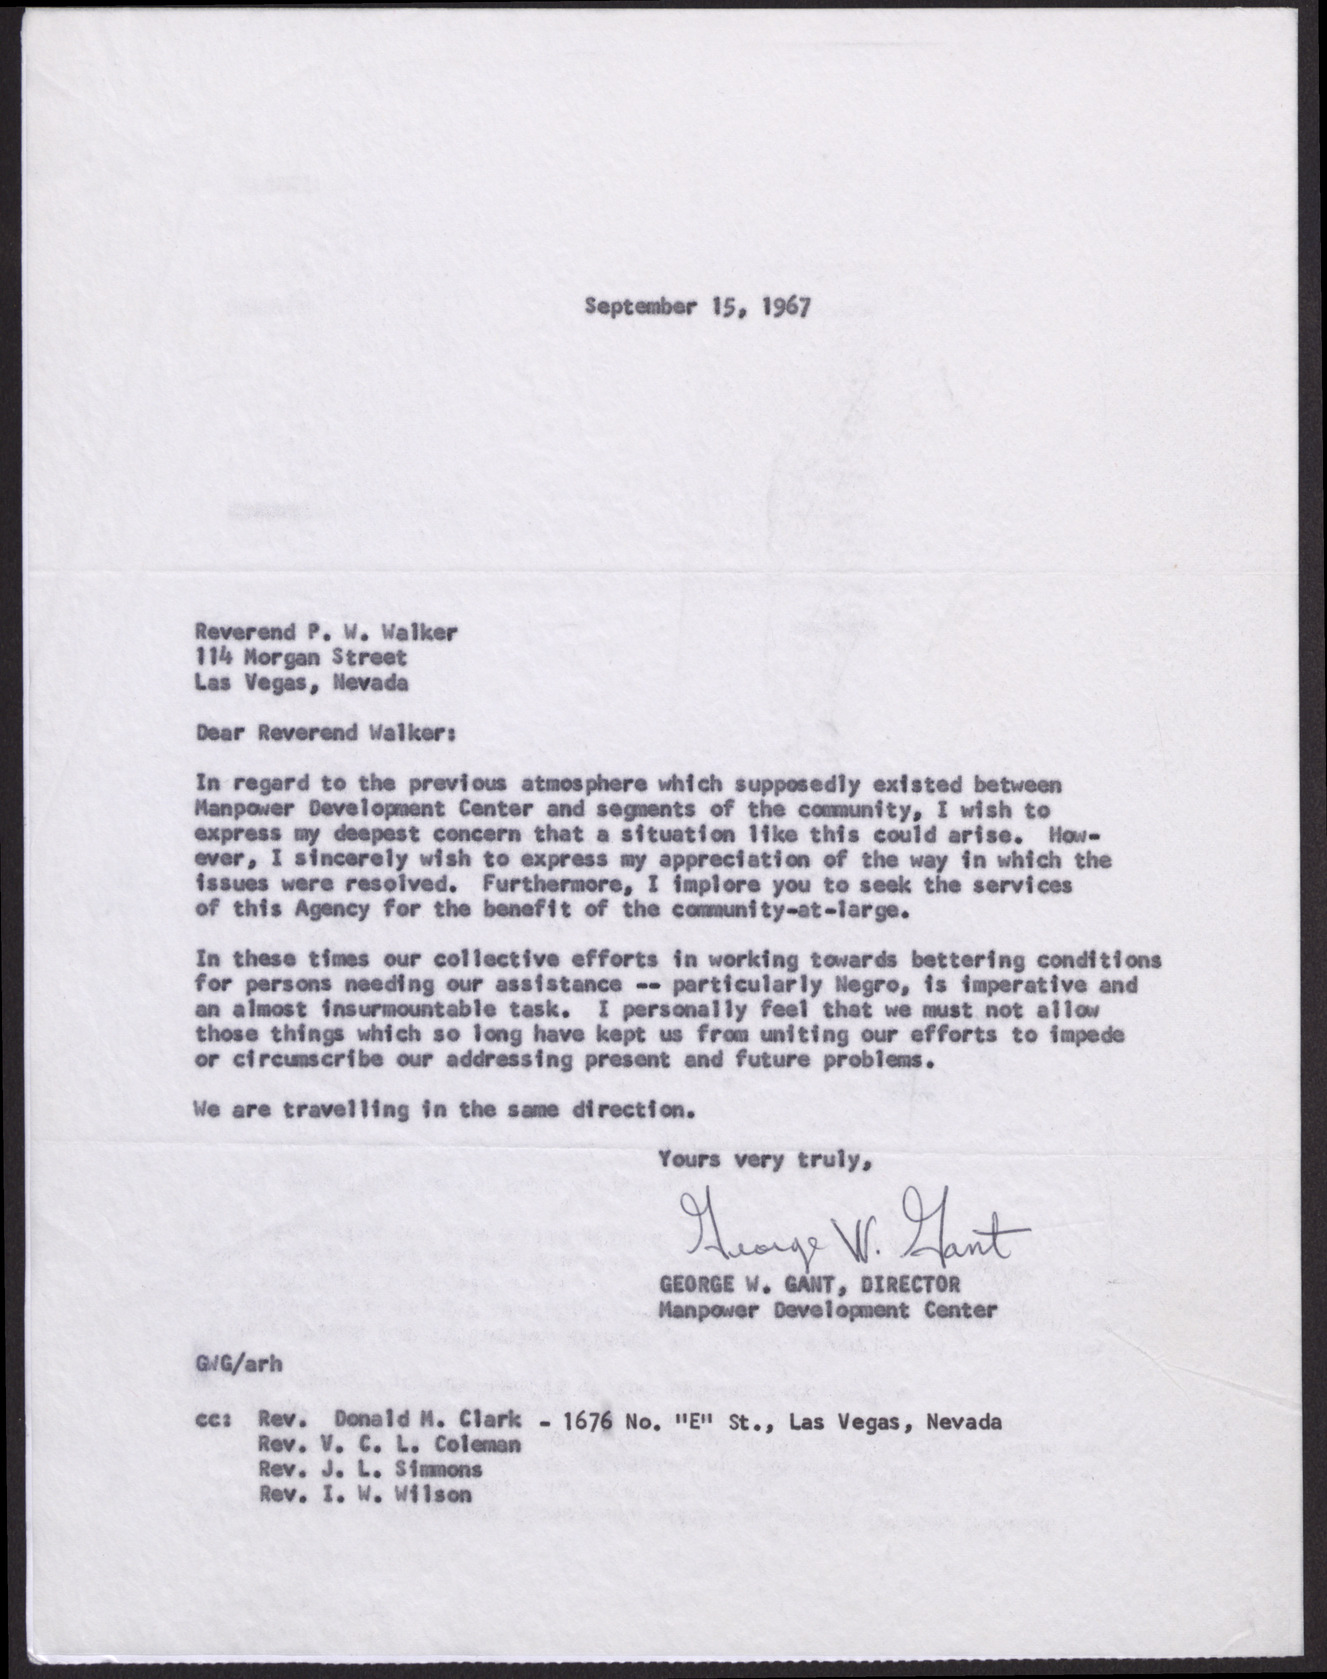 Letter to Reverend P. W. Walker from George W. Gant, September 15, 1967